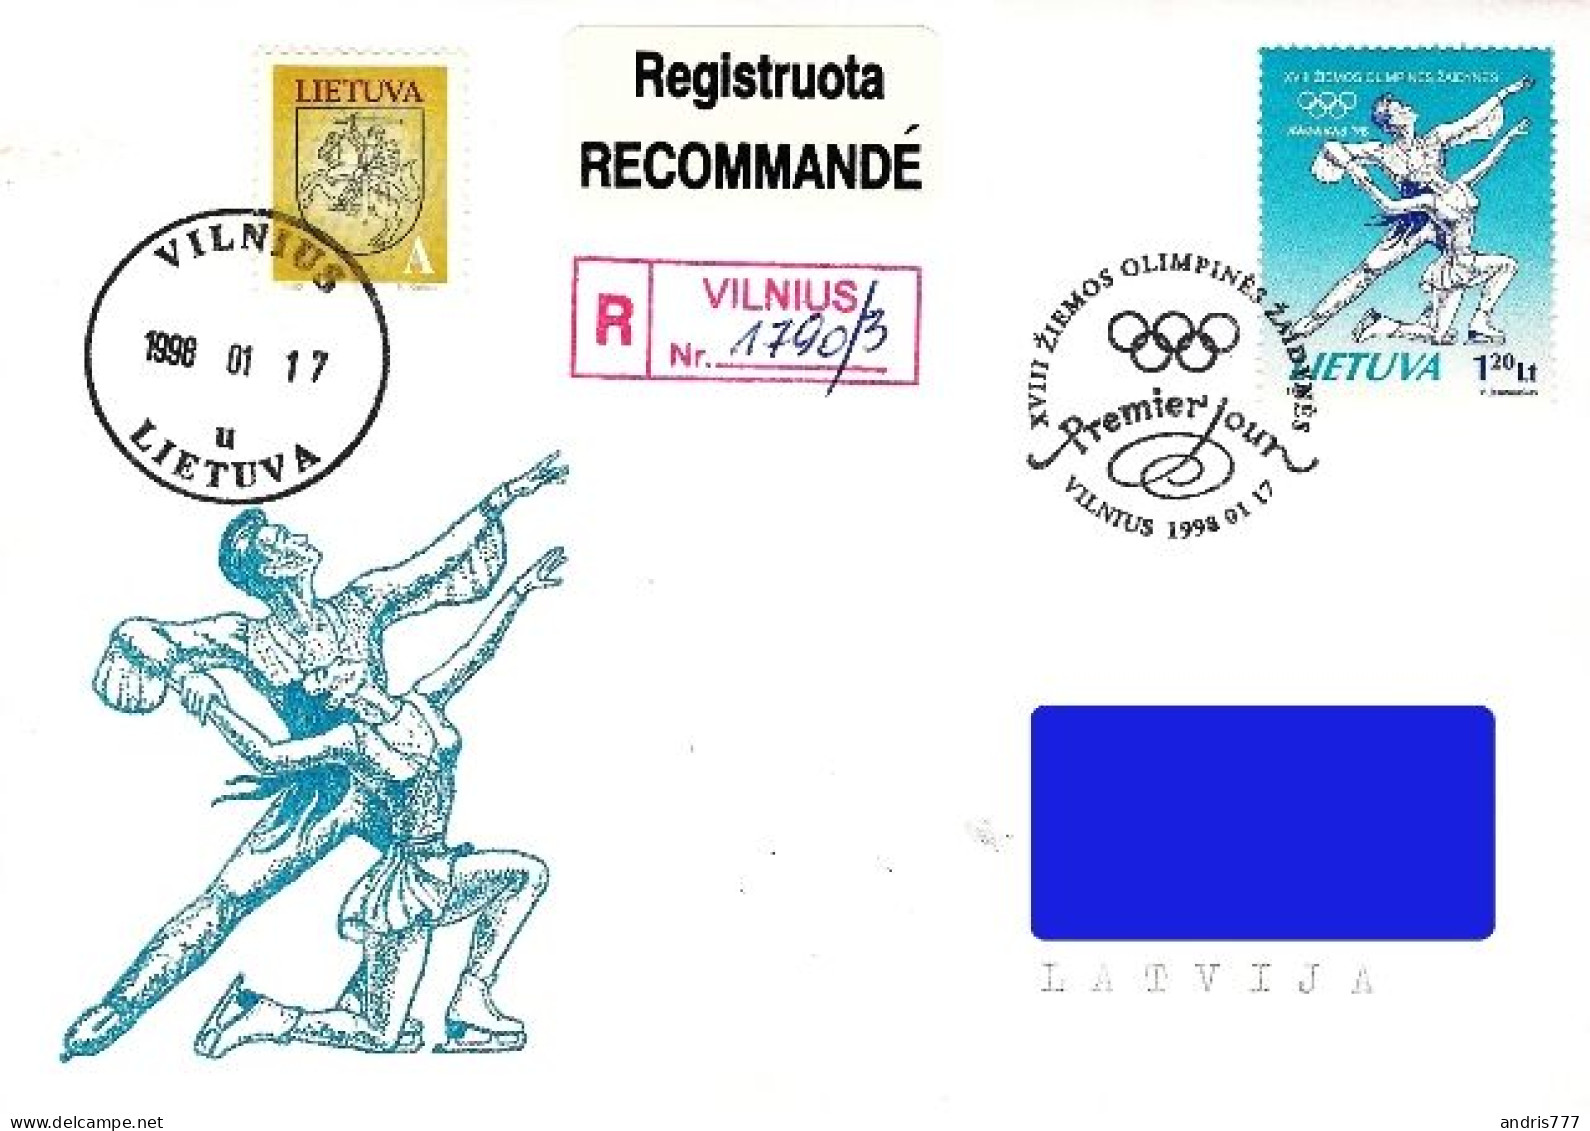 Lithuania Litauen Lituanie 1998 (01) Winter Olympic Games Nagano Figure Skating (addressed FDC) - Litauen